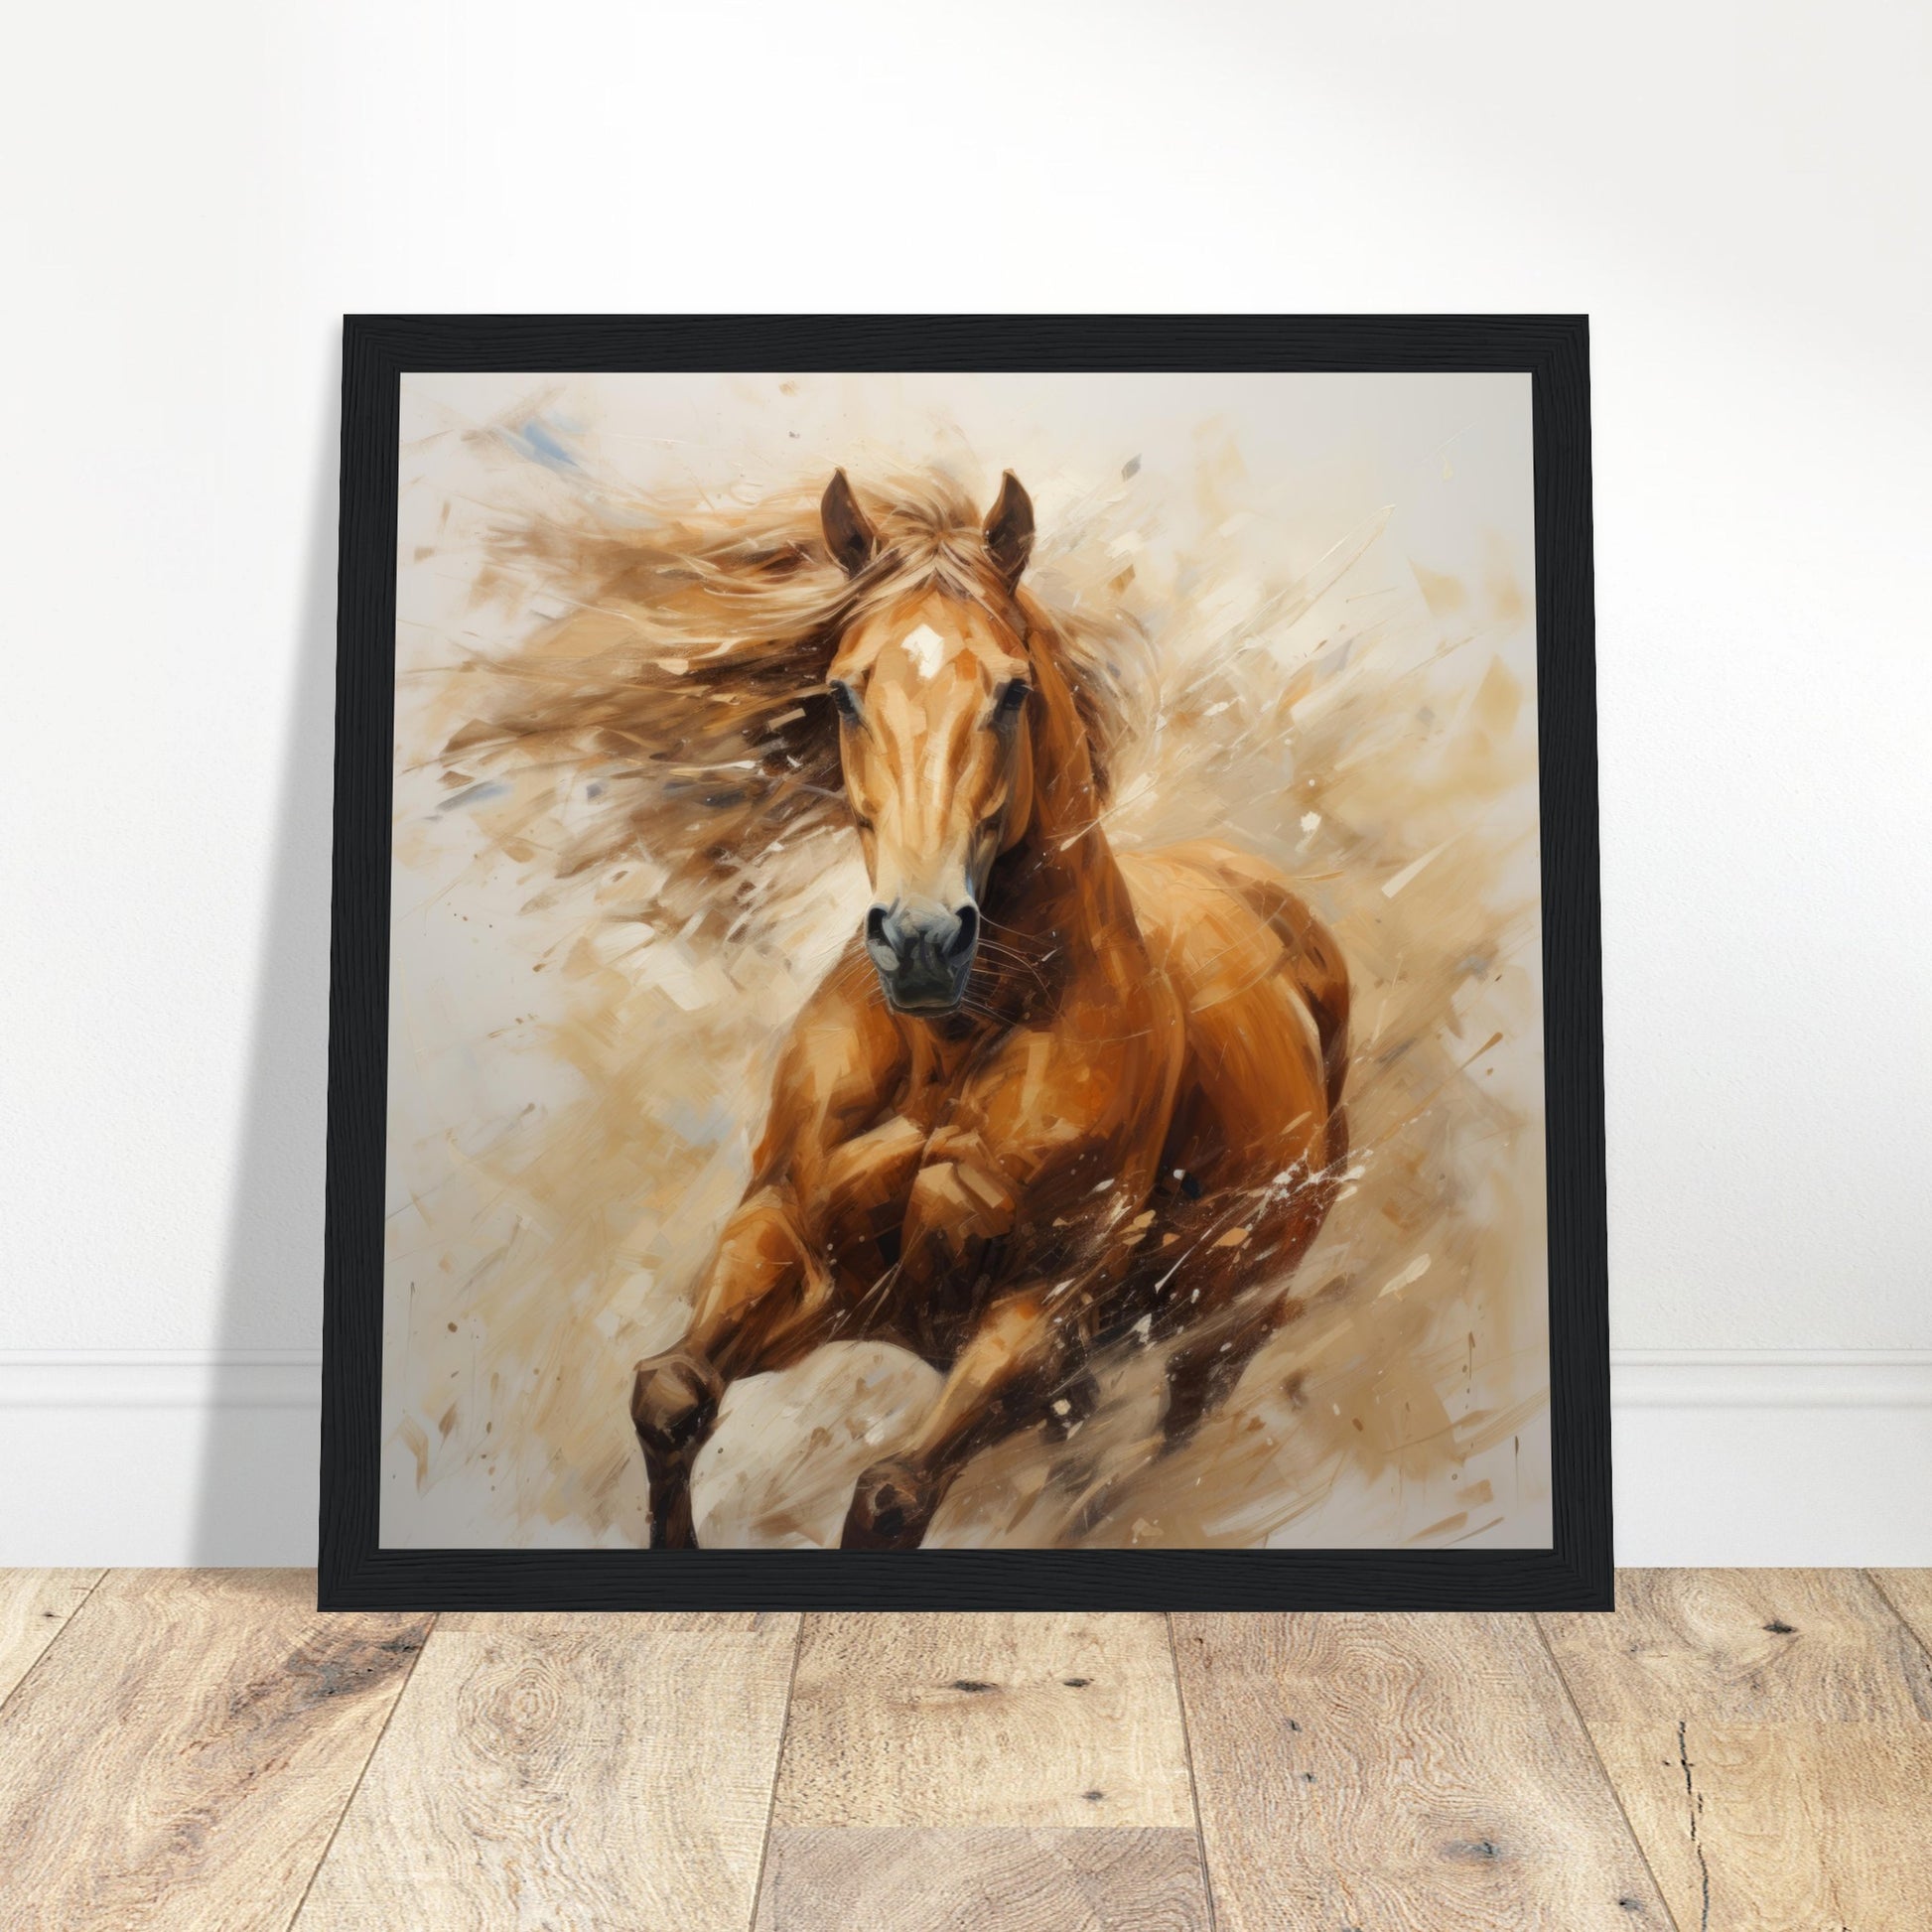 Equine Beauty #15 - Print Room Ltd White frame 30x30 cm / 12x12"